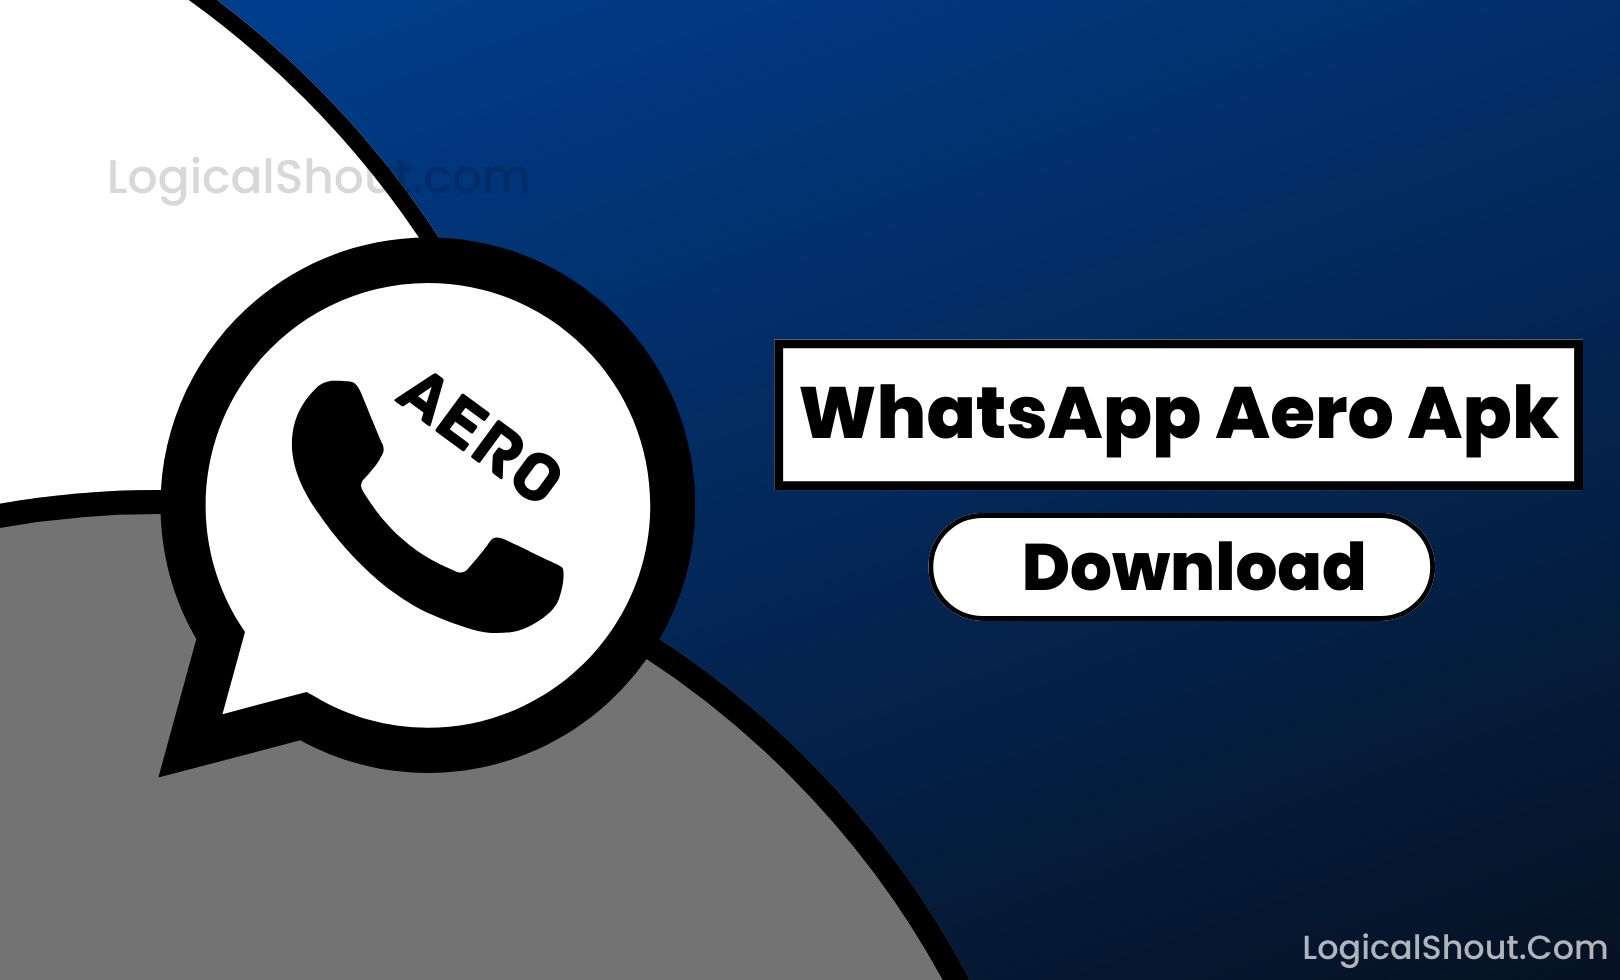 WhatsApp Aero Download